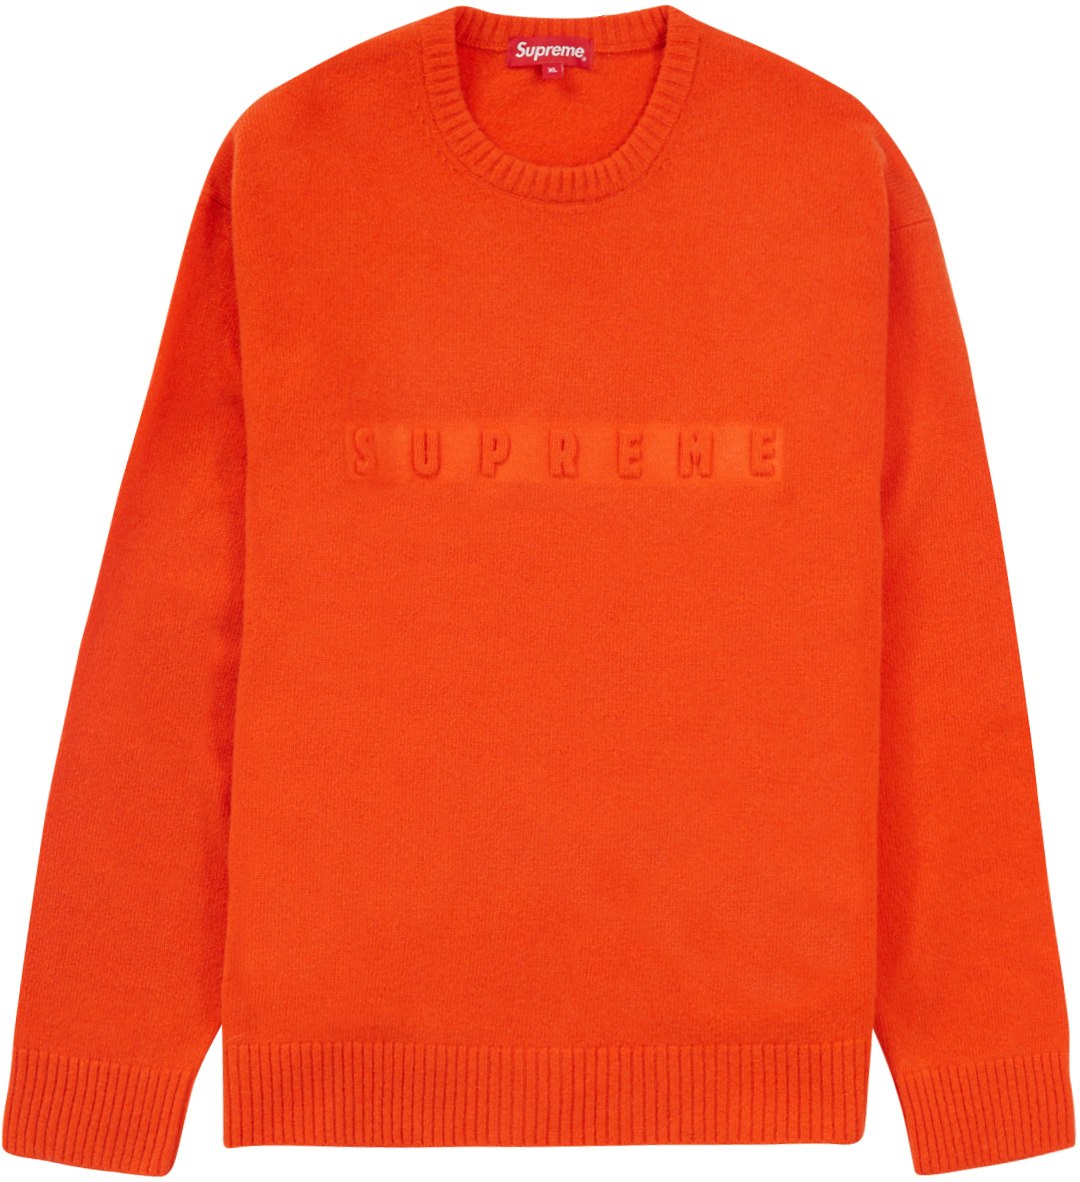 Supreme Embossed Sweater Orange - Novelship